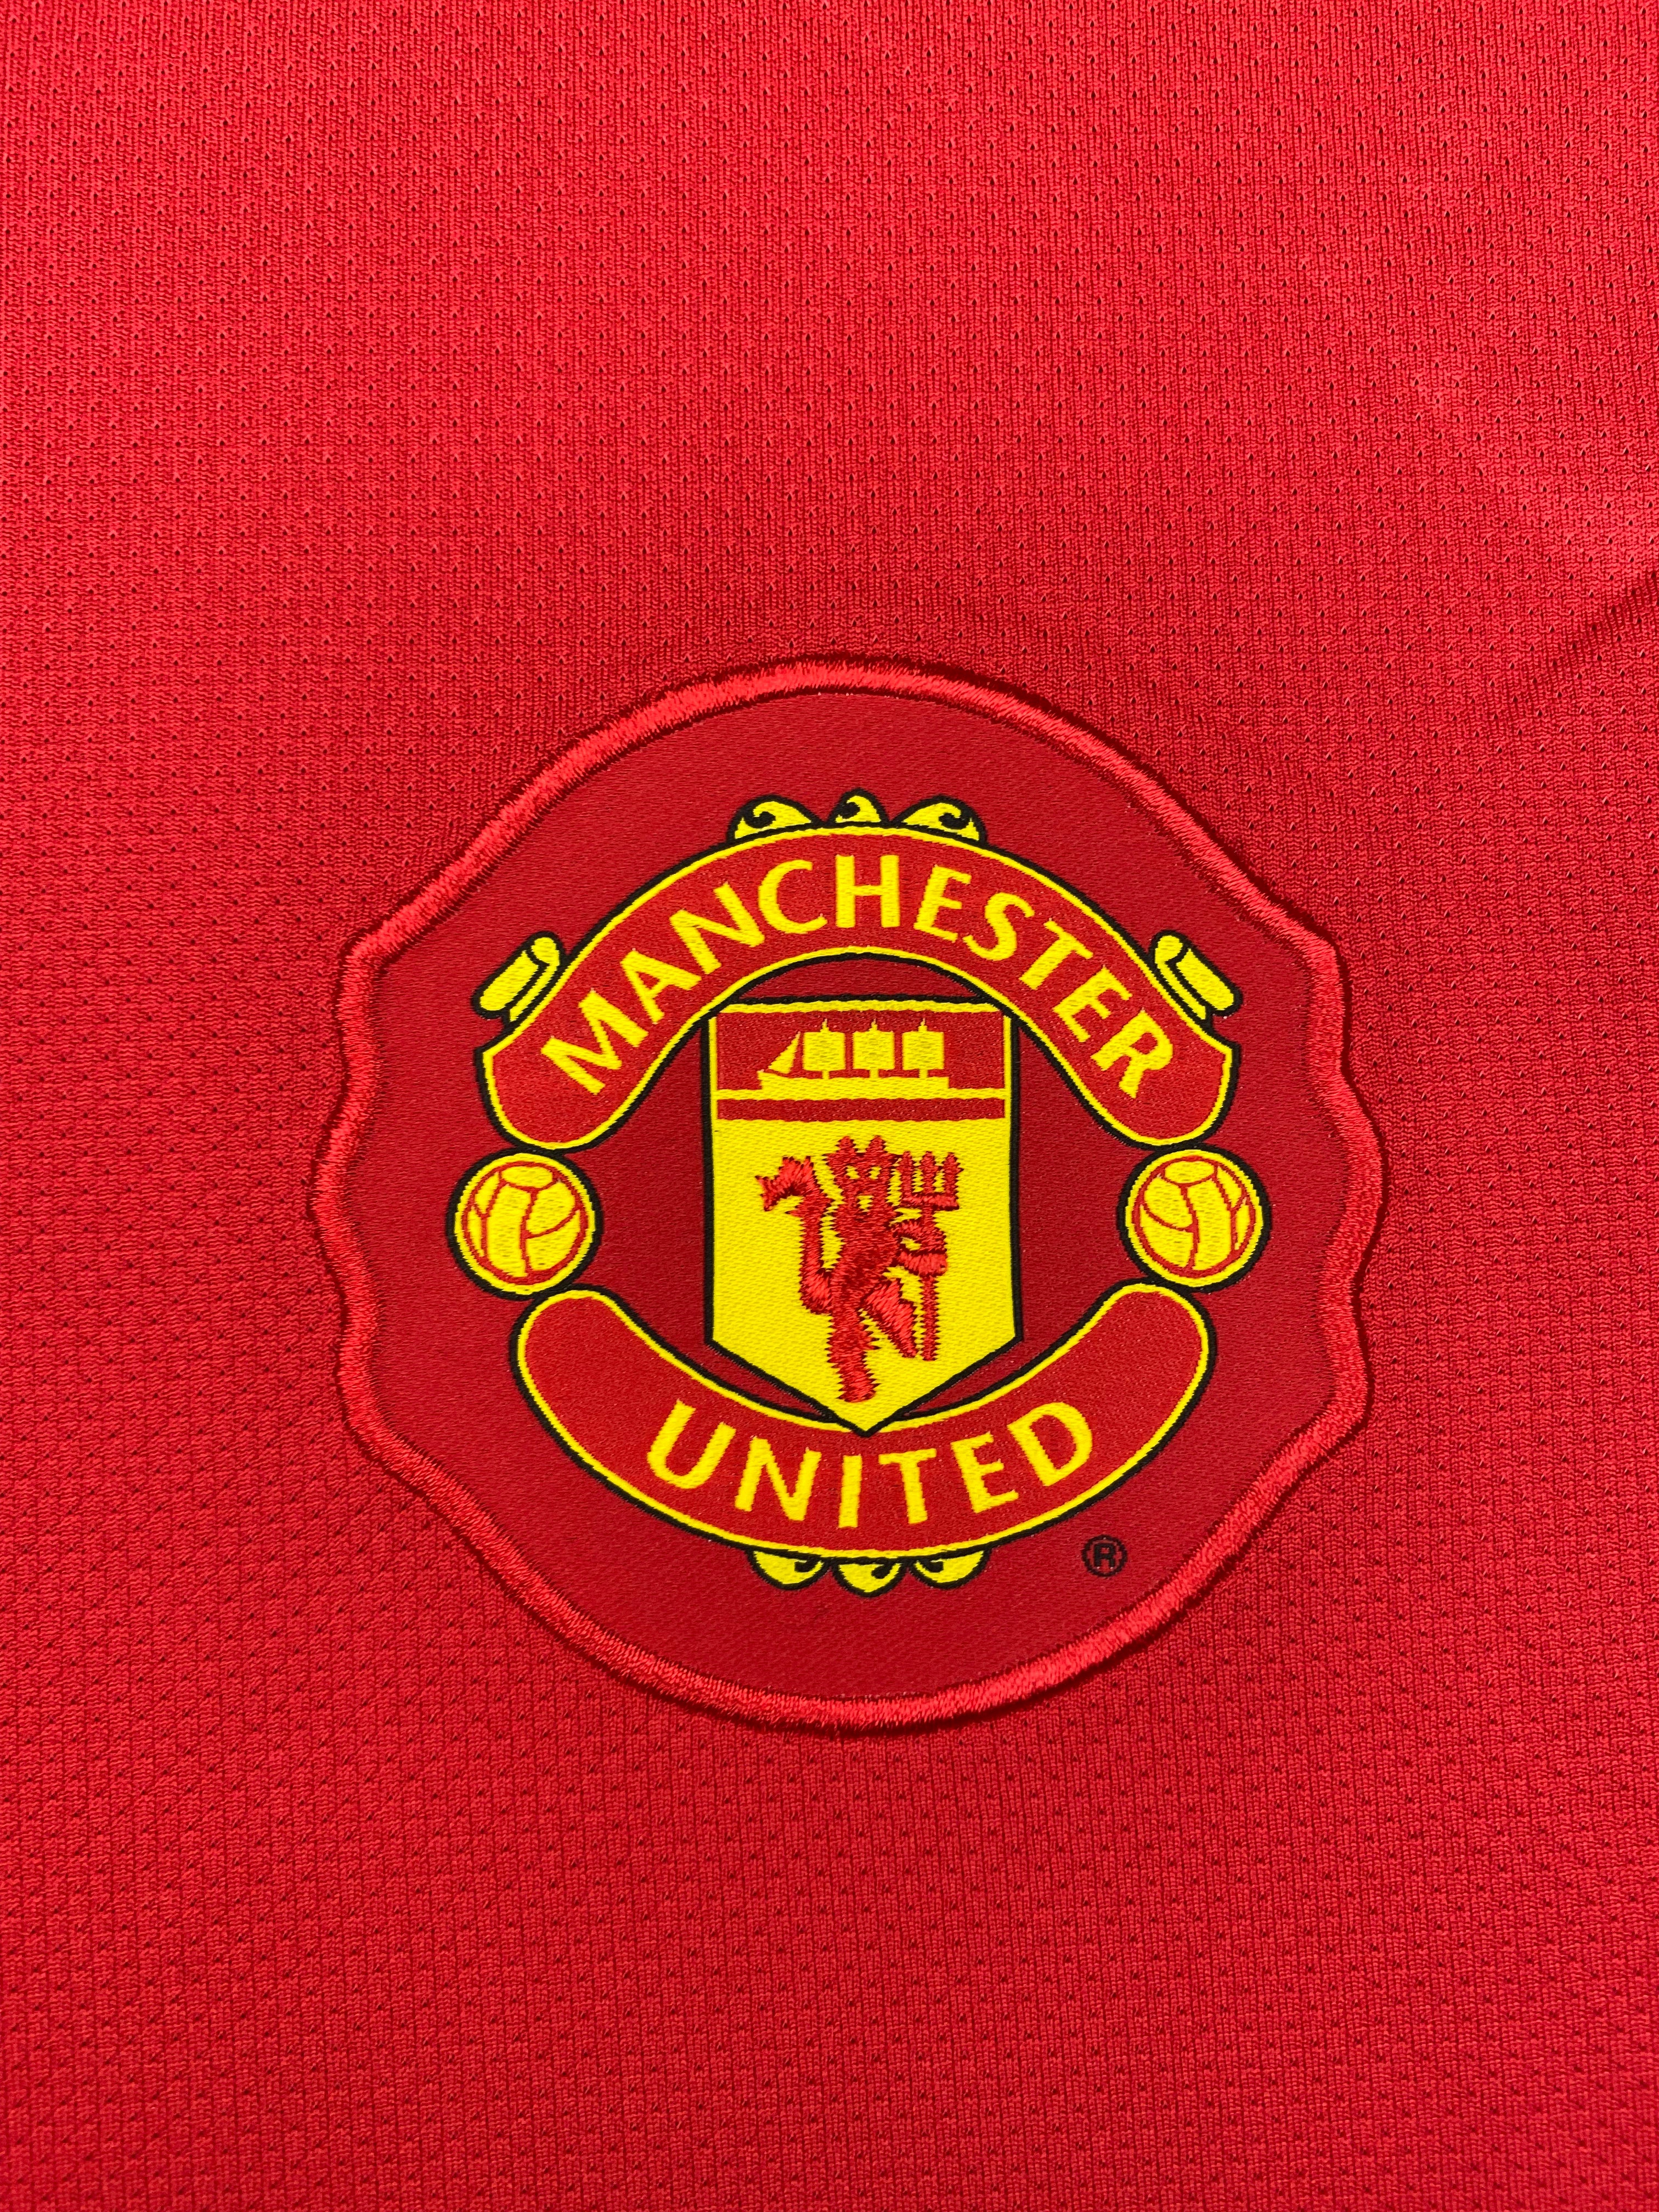 2010/11 Manchester United Home Shirt (XL) 9.5/10